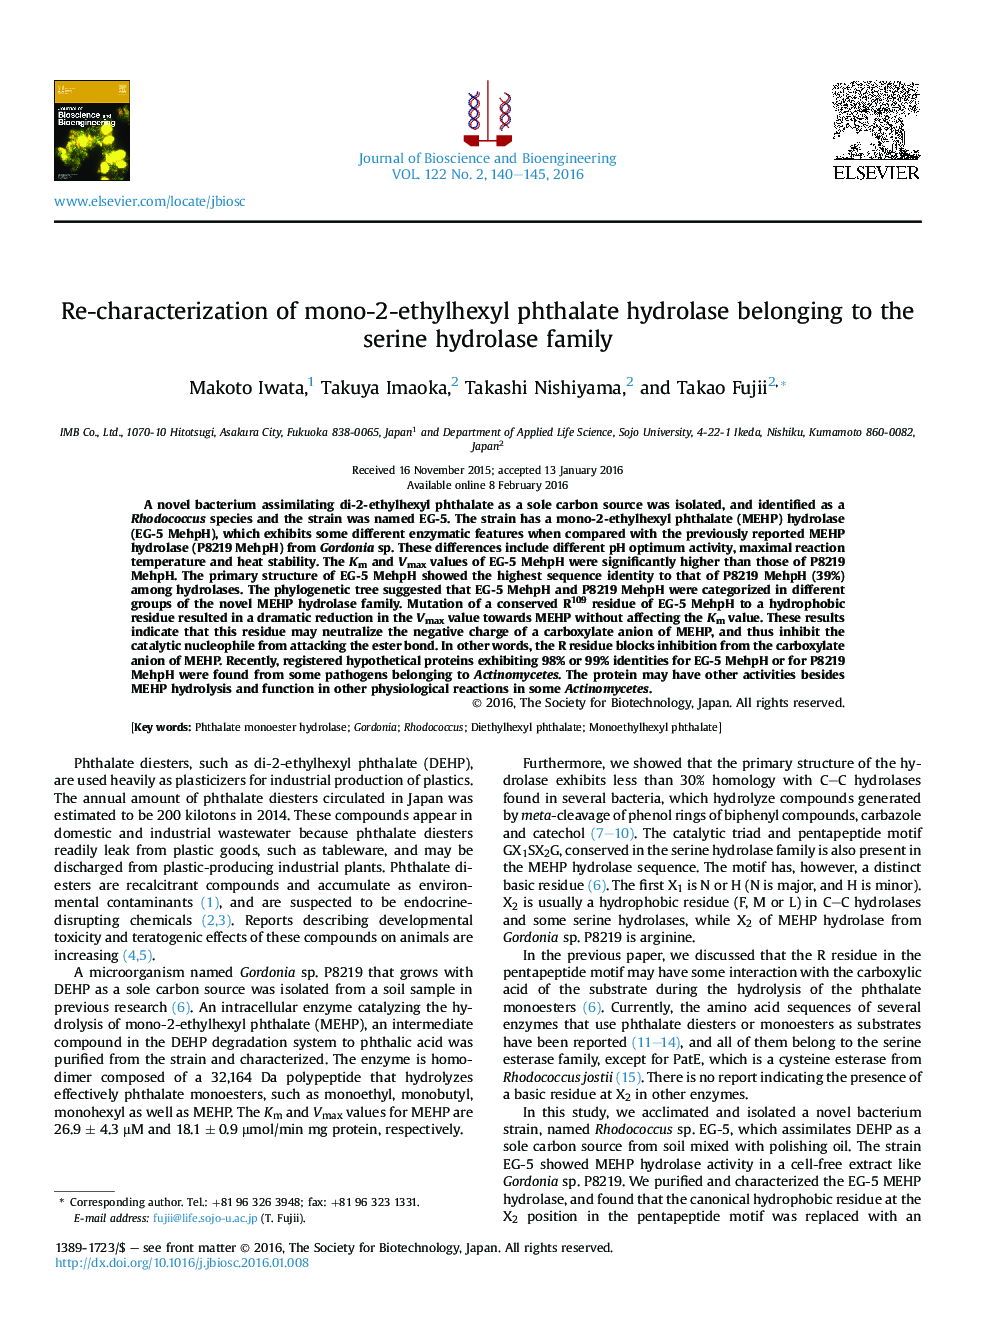 Re-characterization of mono-2-ethylhexyl phthalate hydrolase belonging to the serine hydrolase family